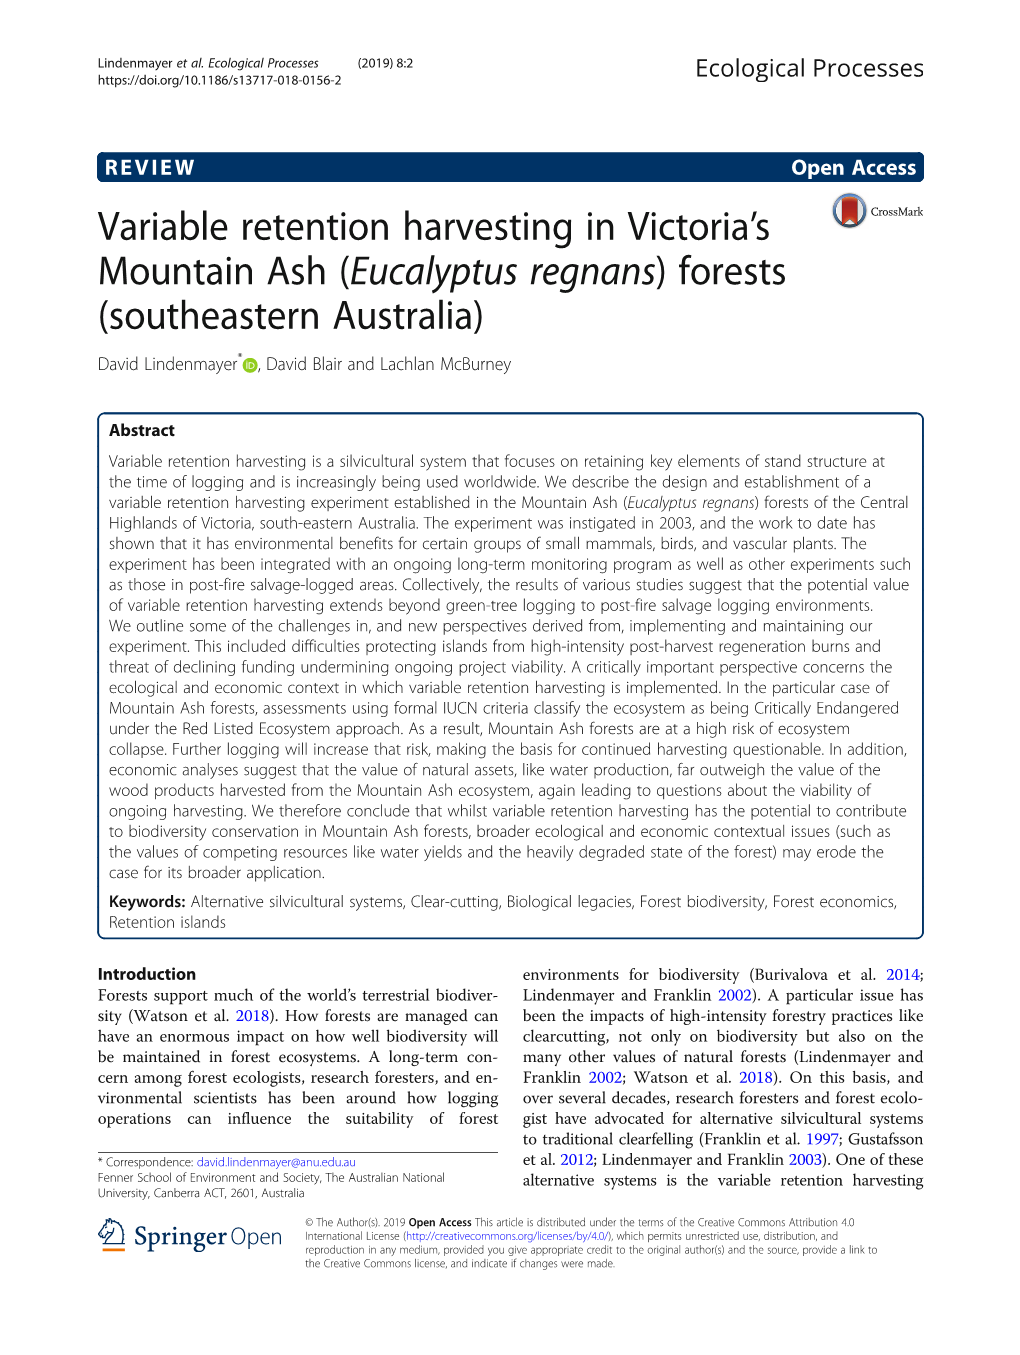 Variable Retention Harvesting in Victoria's Mountain Ash (Eucalyptus